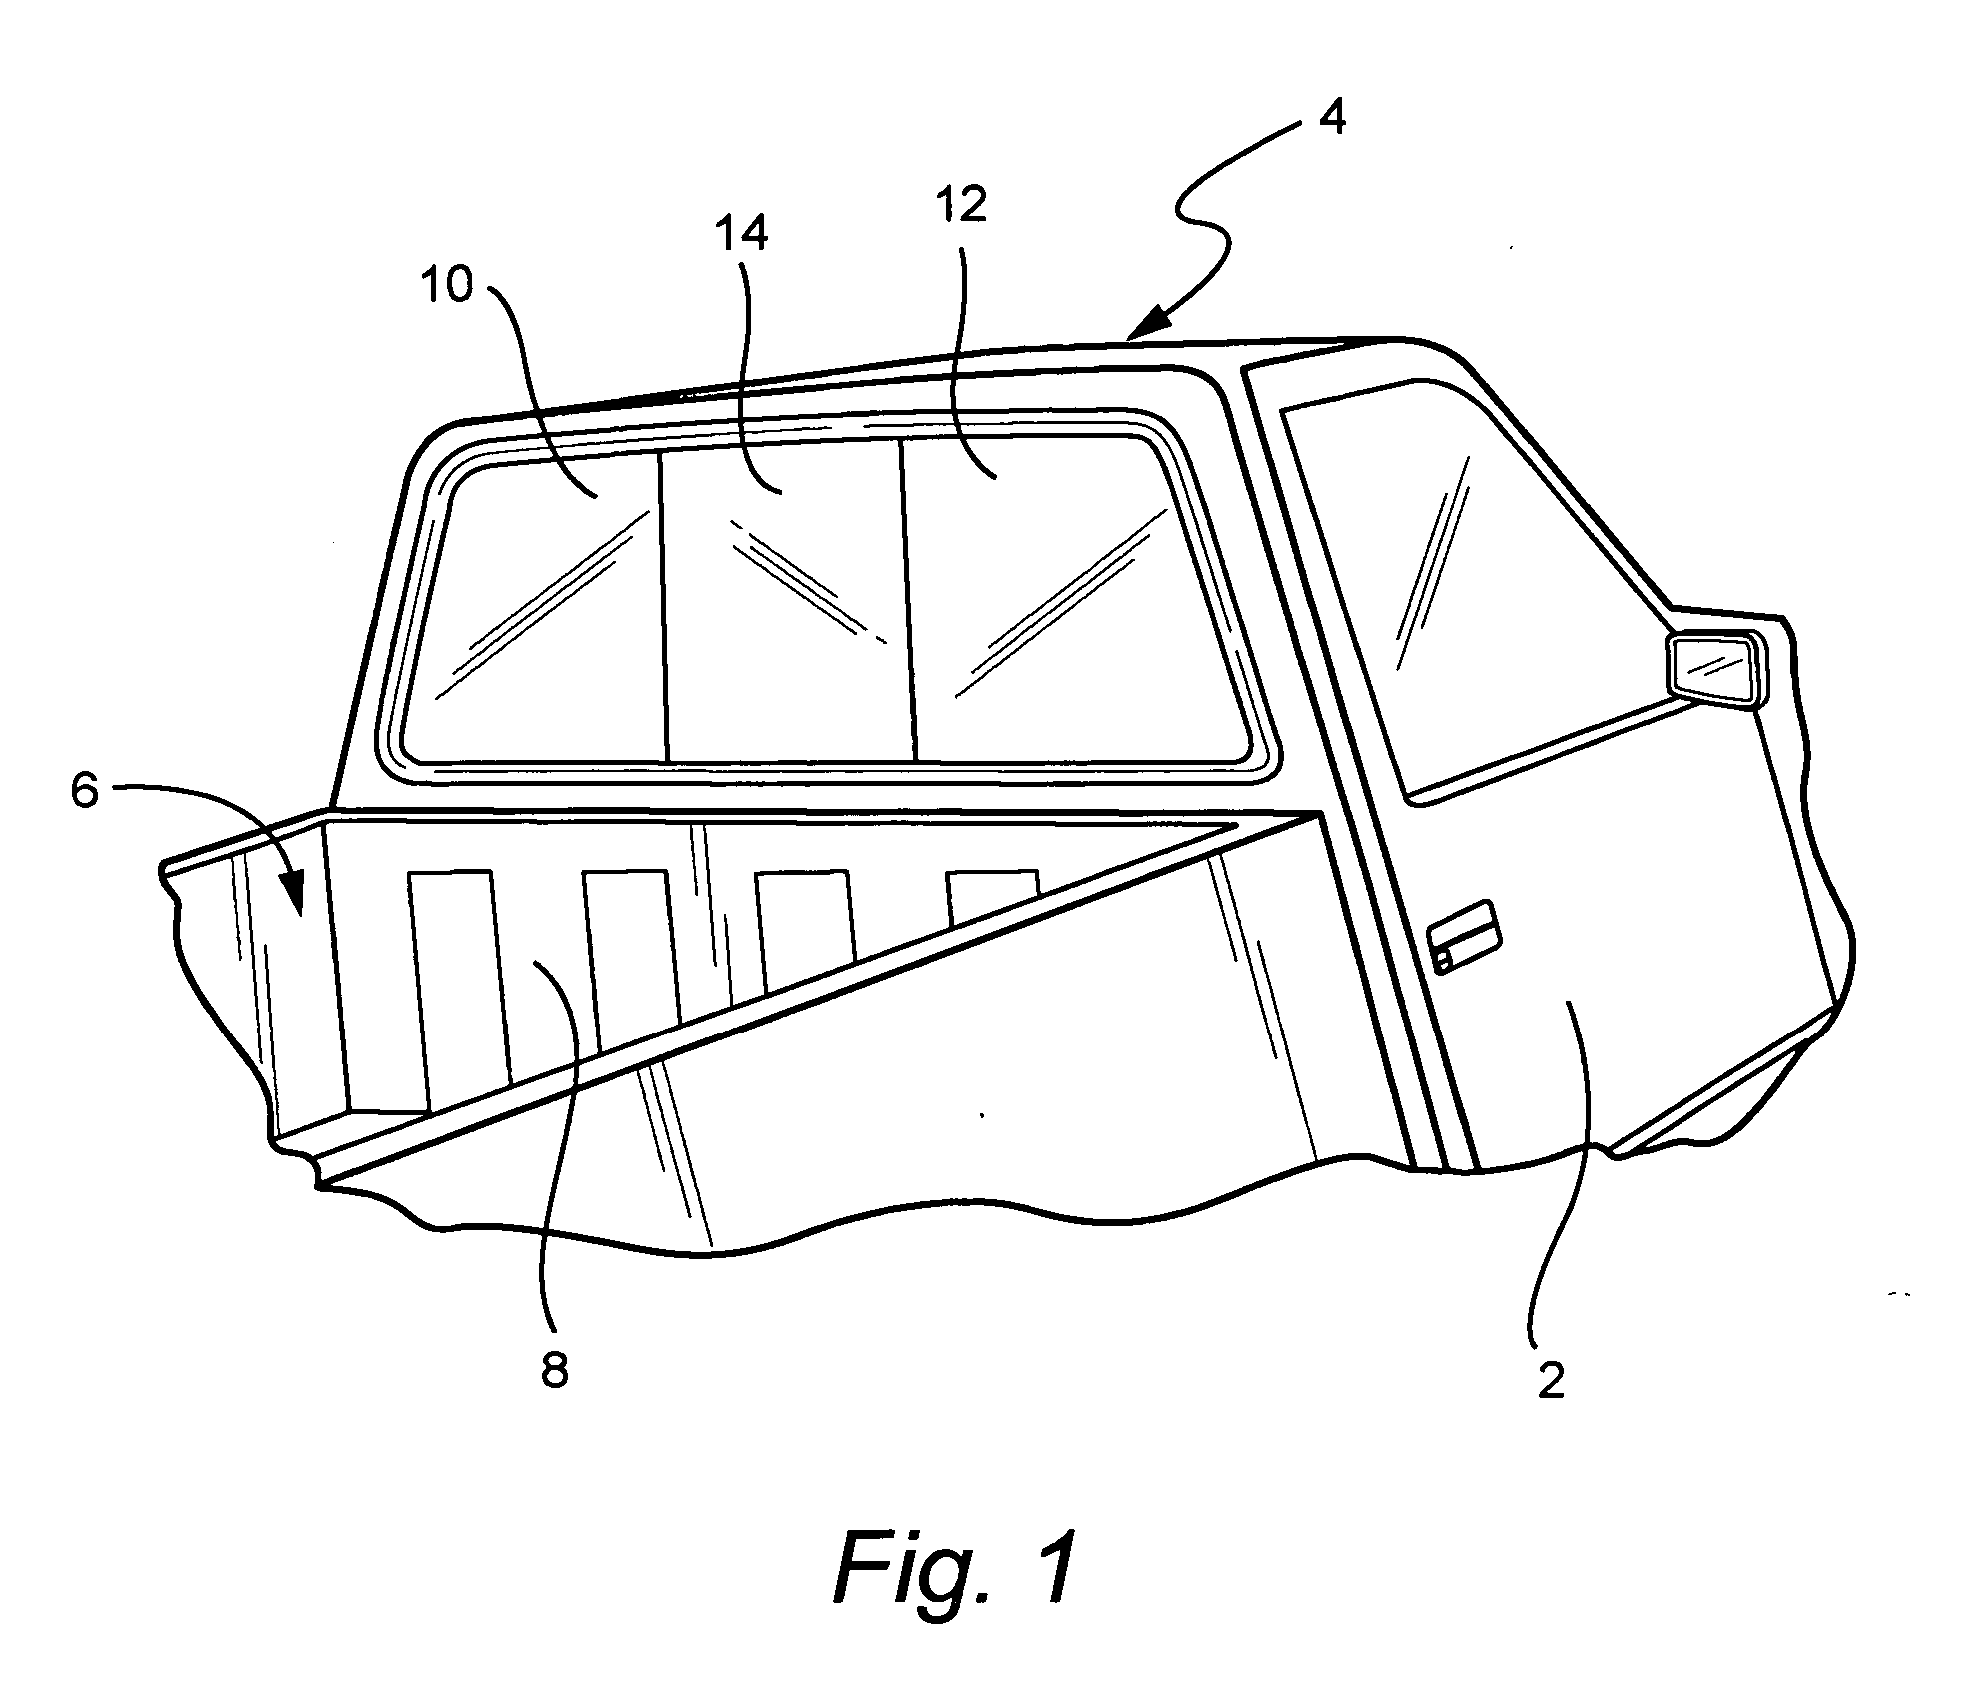 Flush-mounted slider window for pick-up truck